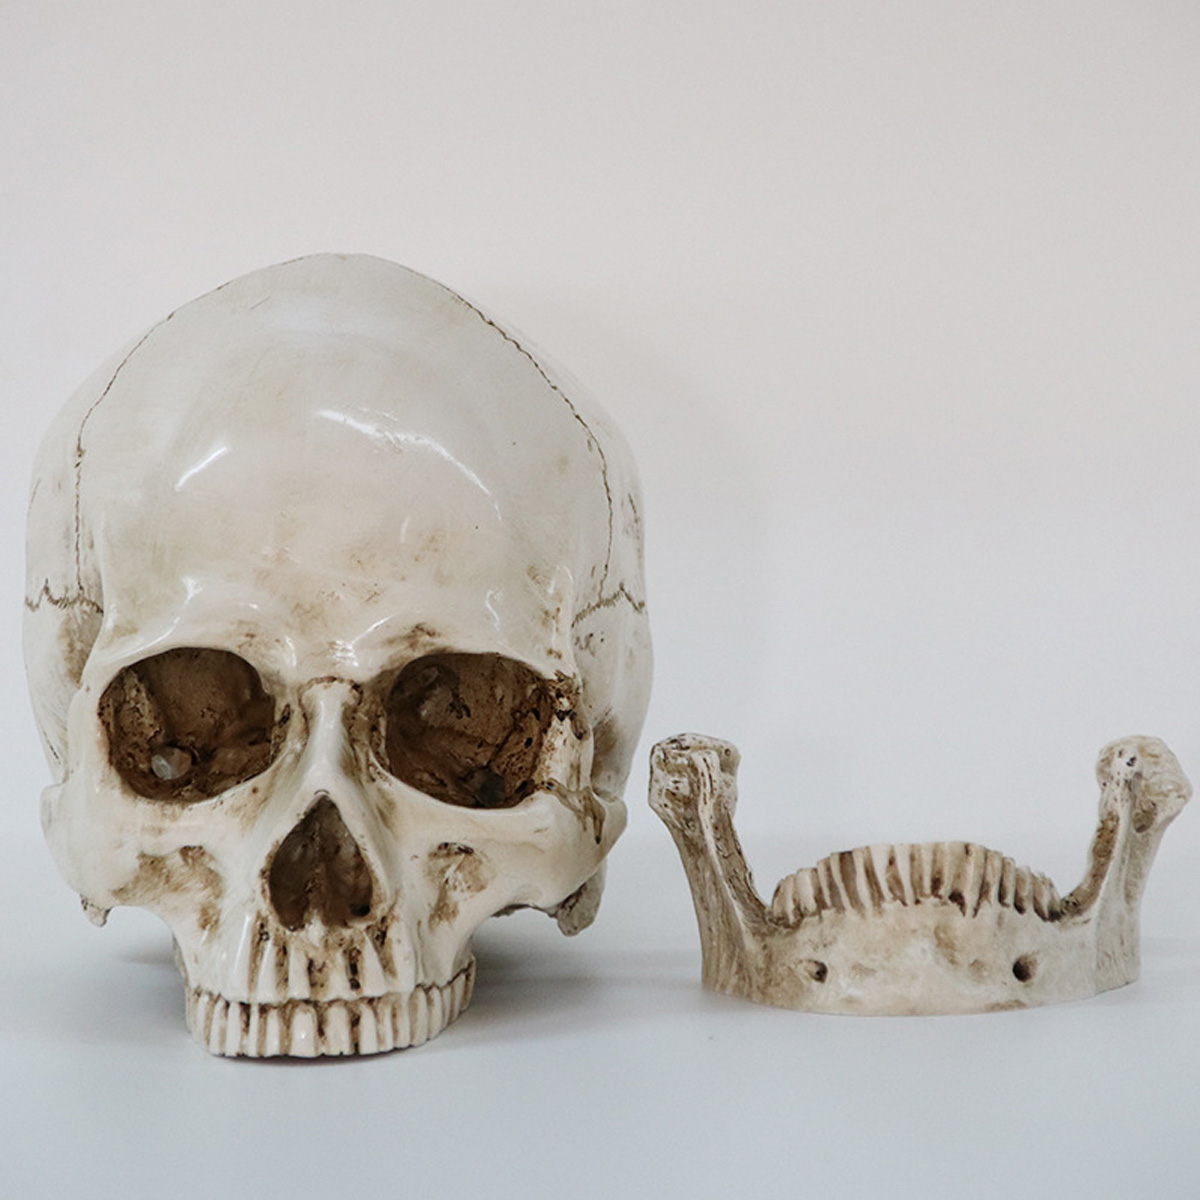 Halloween Skeleton Head Decor Skeleton Model Horror Scary Gothic Skull Prop Ornaments Halloween Atmosphere Decoration